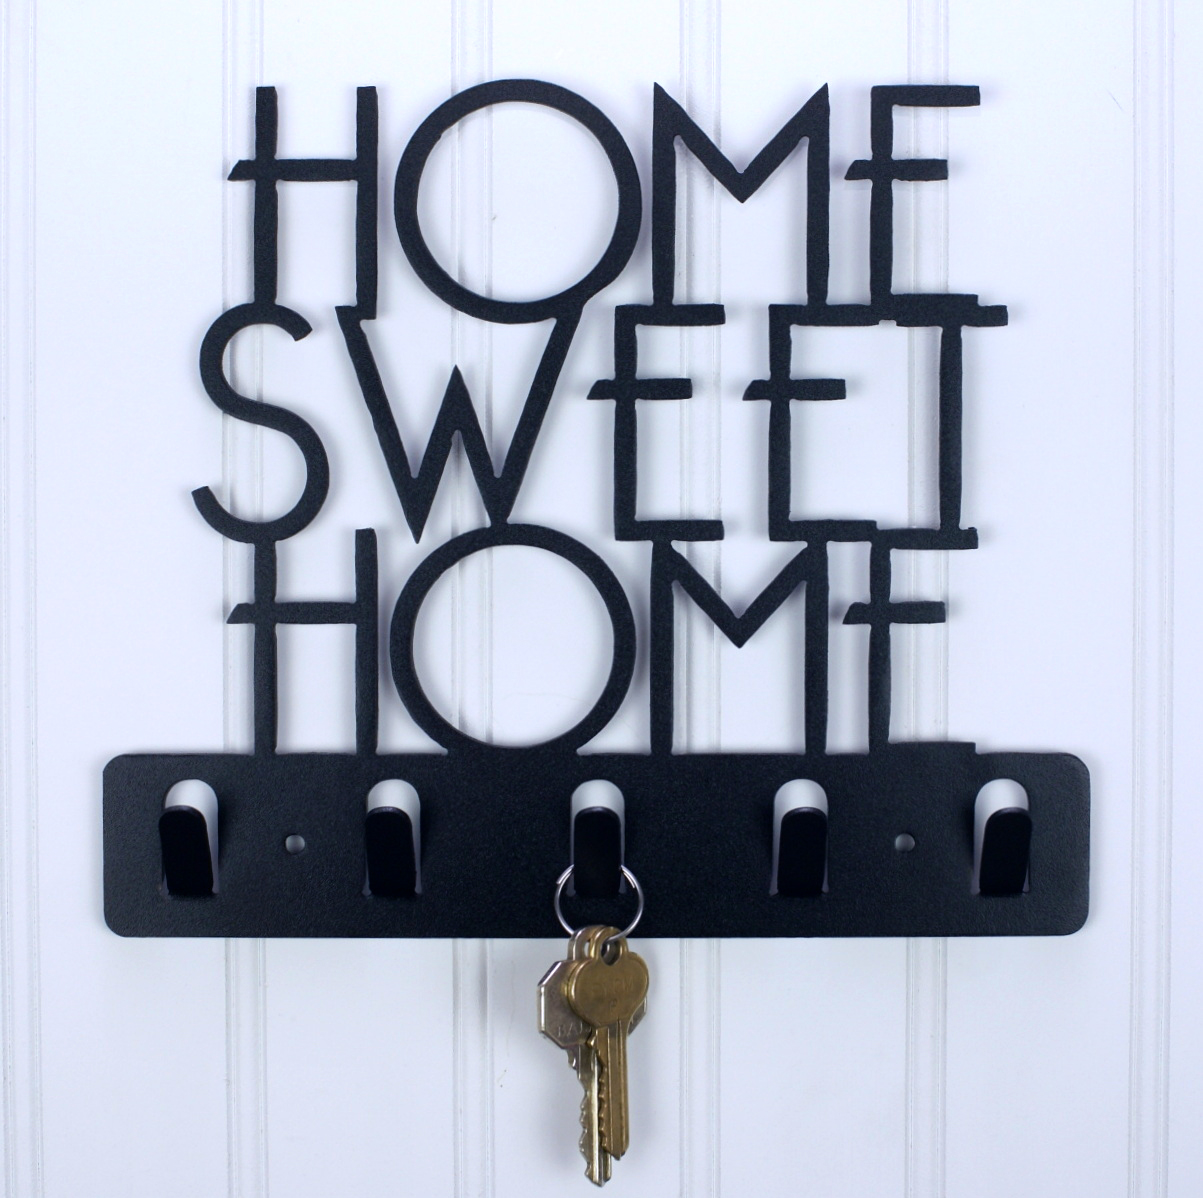 Keys Key Rack Holder Organizer 8"x3"  on Wood Board Home Sweet Home 4 Wall Art 